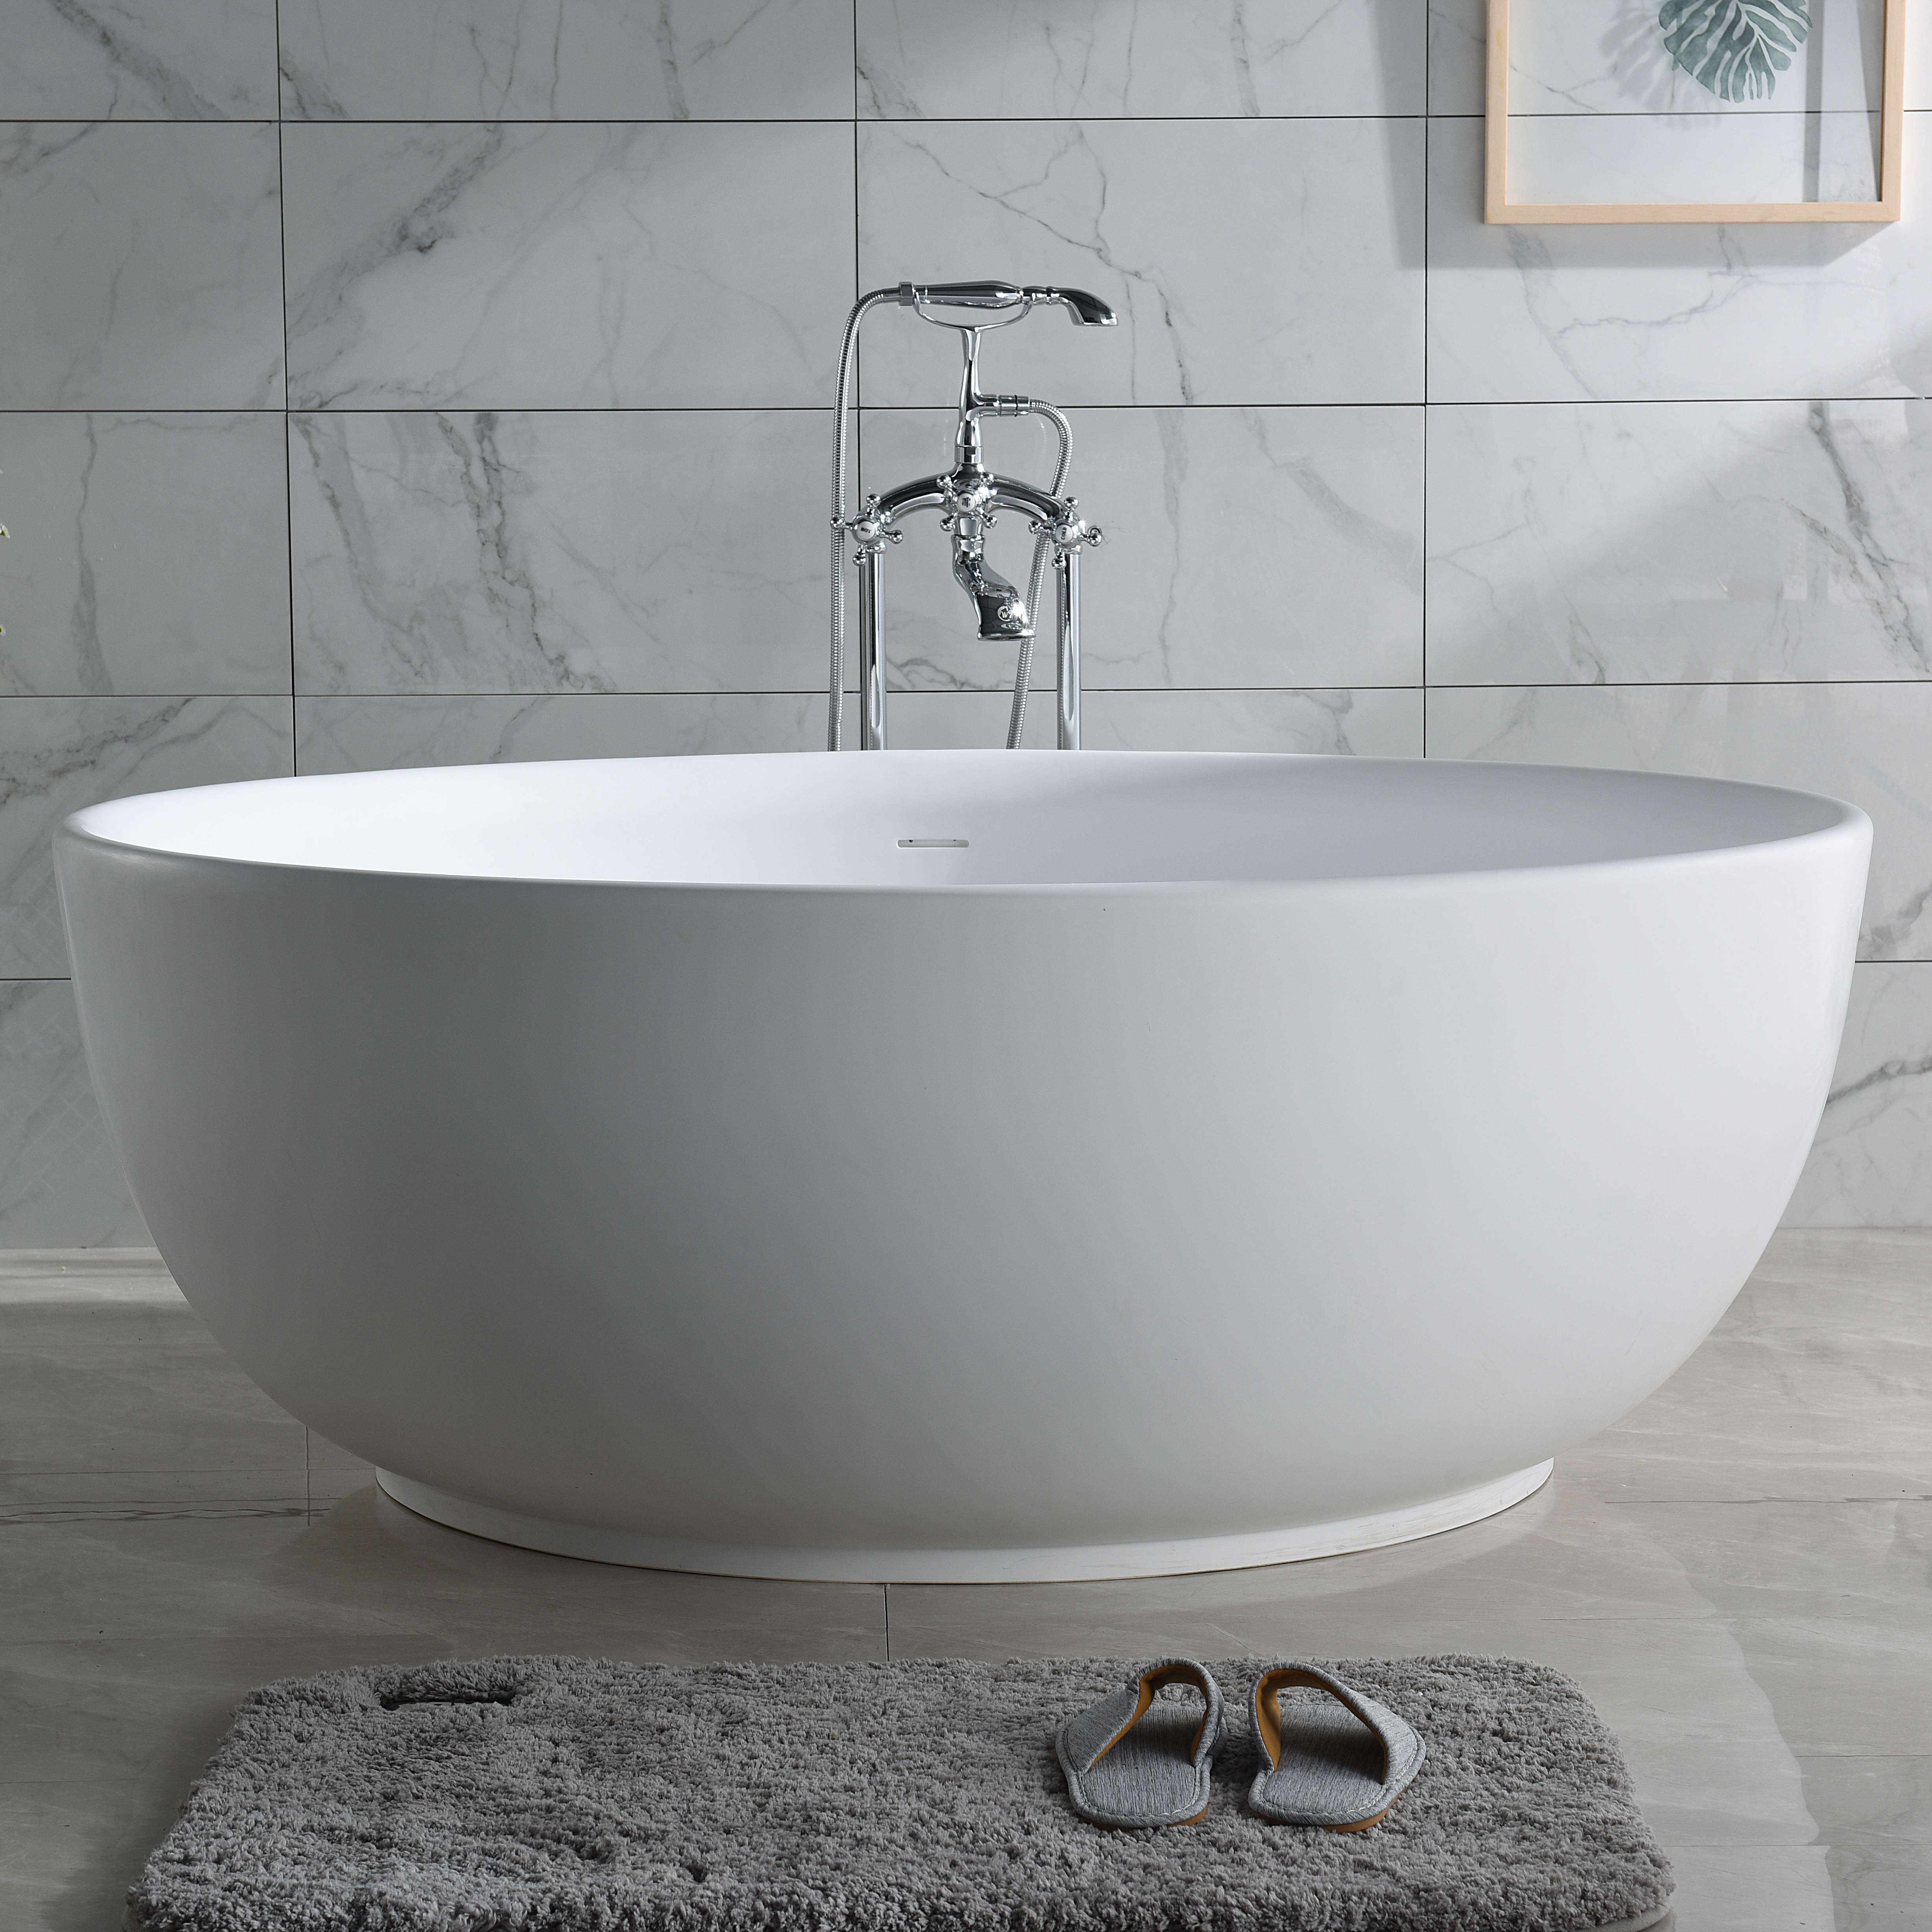 Circular shape free standing matt white solid surface bathroom bathtub